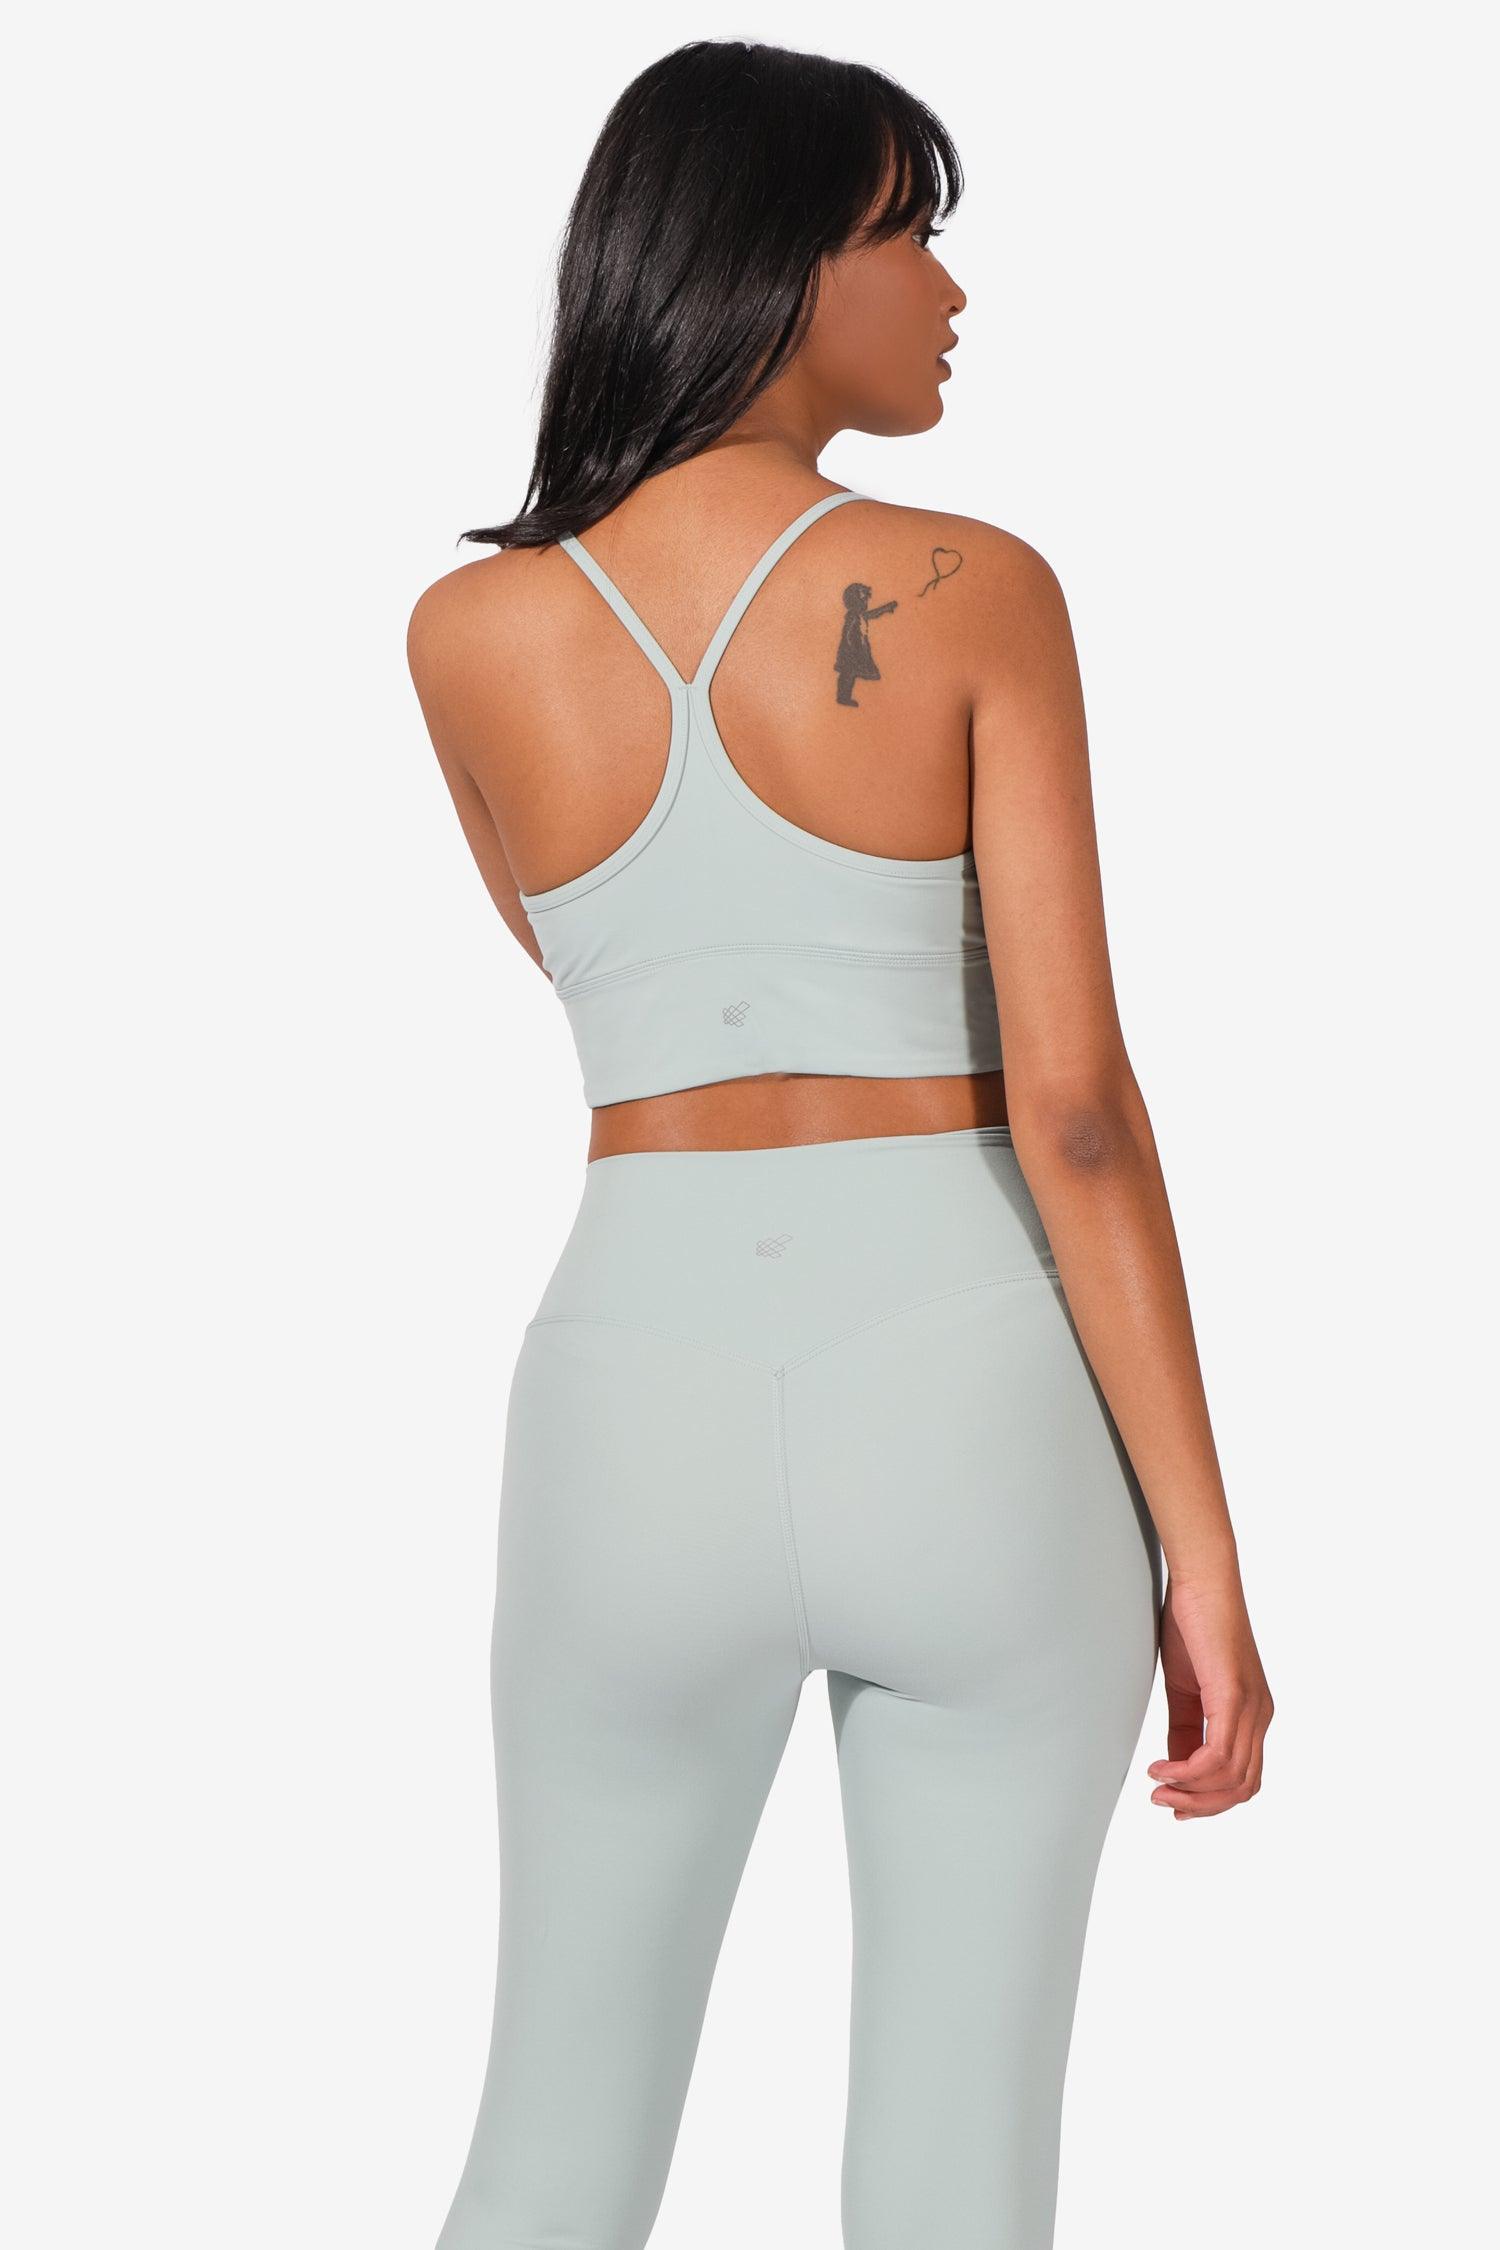 Y-Back Bra – Mint To Be (Mint Green)  Runners world, High impact sports bra,  Comfortable sports bra